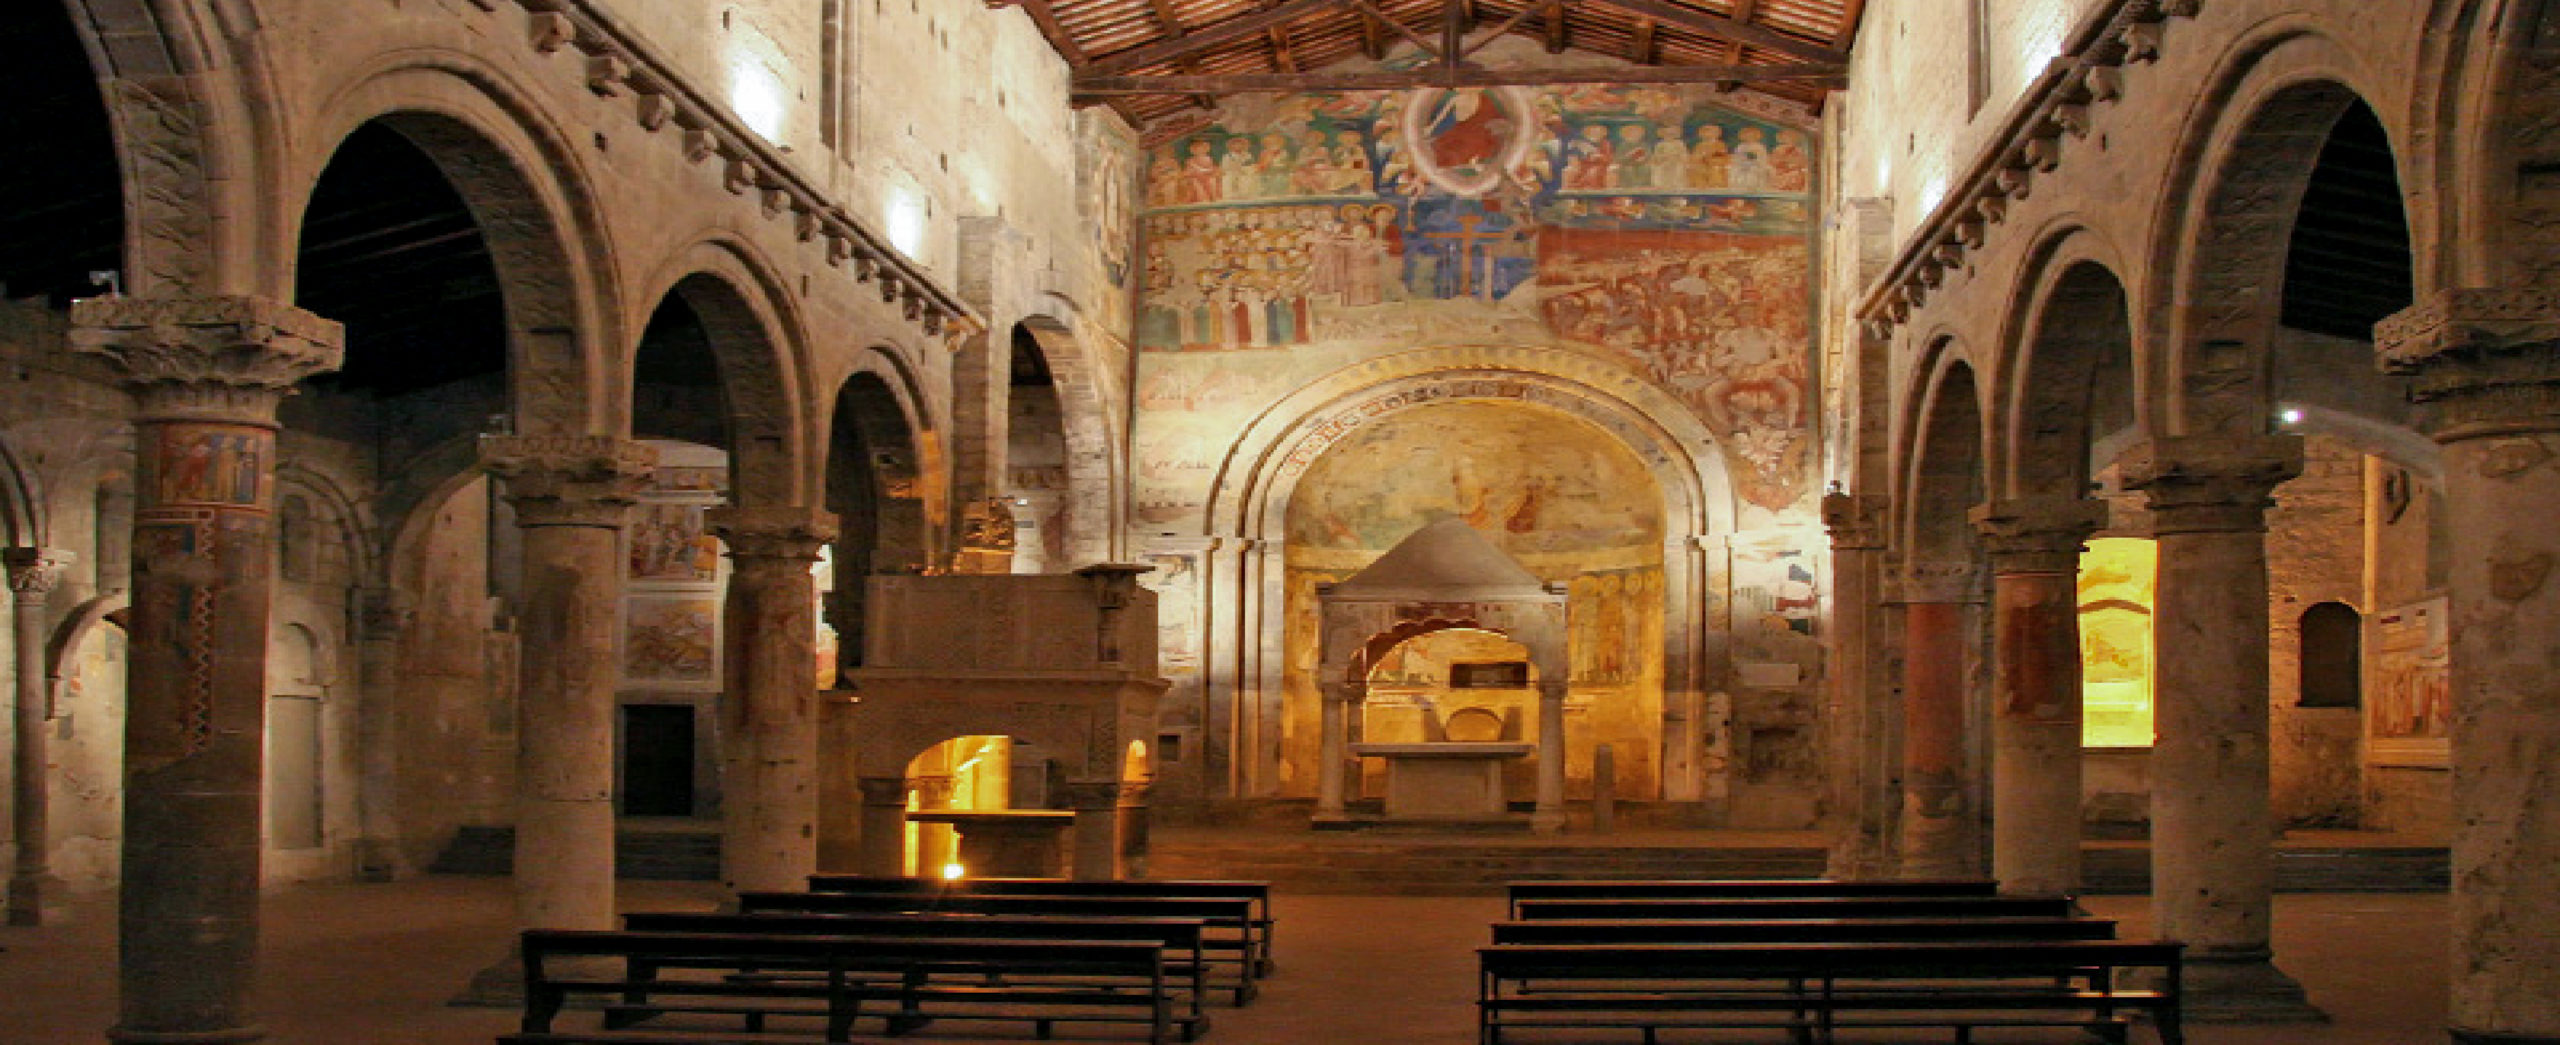 Tuscania - Interno Basilica Santa Maria Maggiore